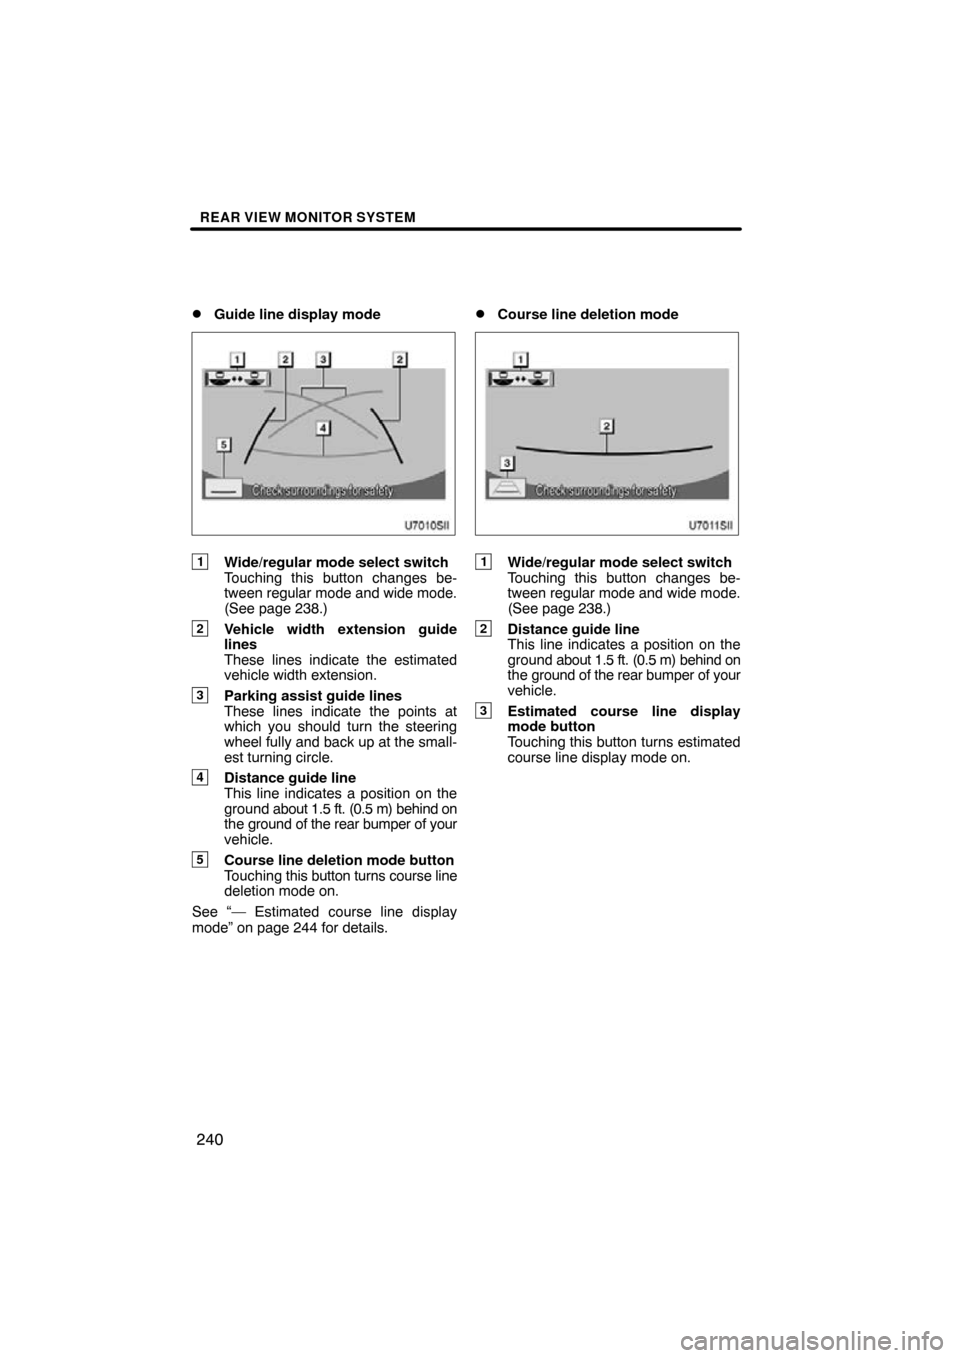 TOYOTA SIENNA 2014 XL30 / 3.G Navigation Manual REAR VIEW MONITOR SYSTEM
240

Guide line display mode
1Wide/regular mode select switch
Touching this button changes be-
tween regular mode and wide mode.
(See page 238.)
2Vehicle width extension guid